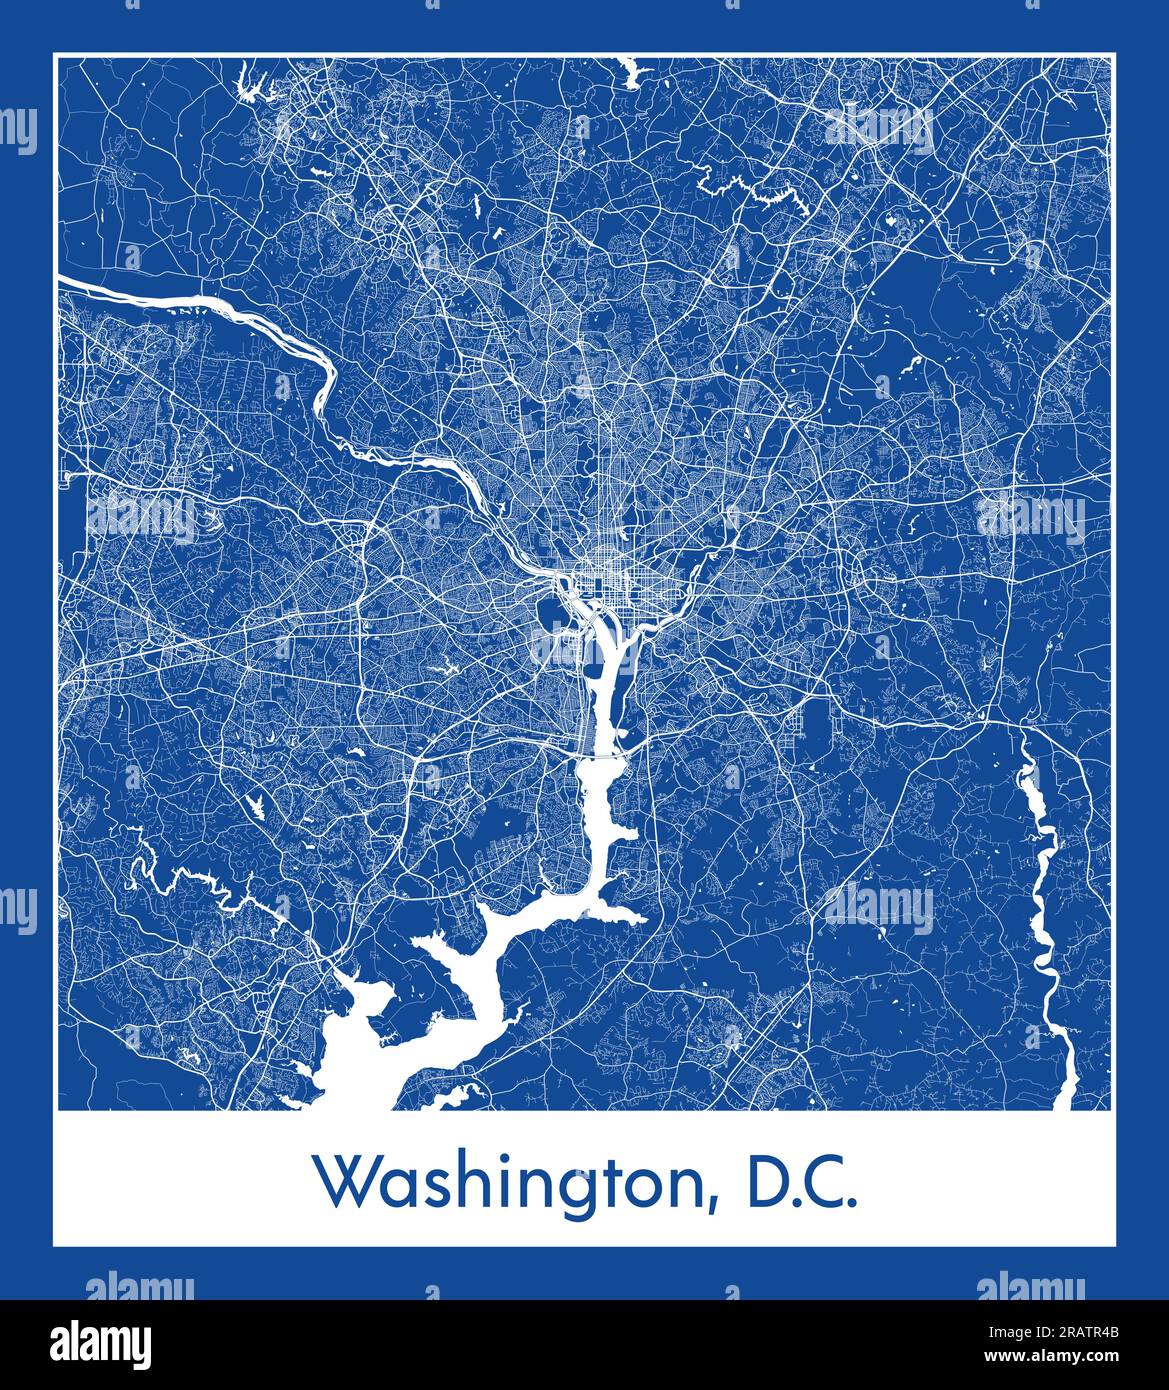 Washington D. C. United States North America City map blue print vector illustration Stock Vector